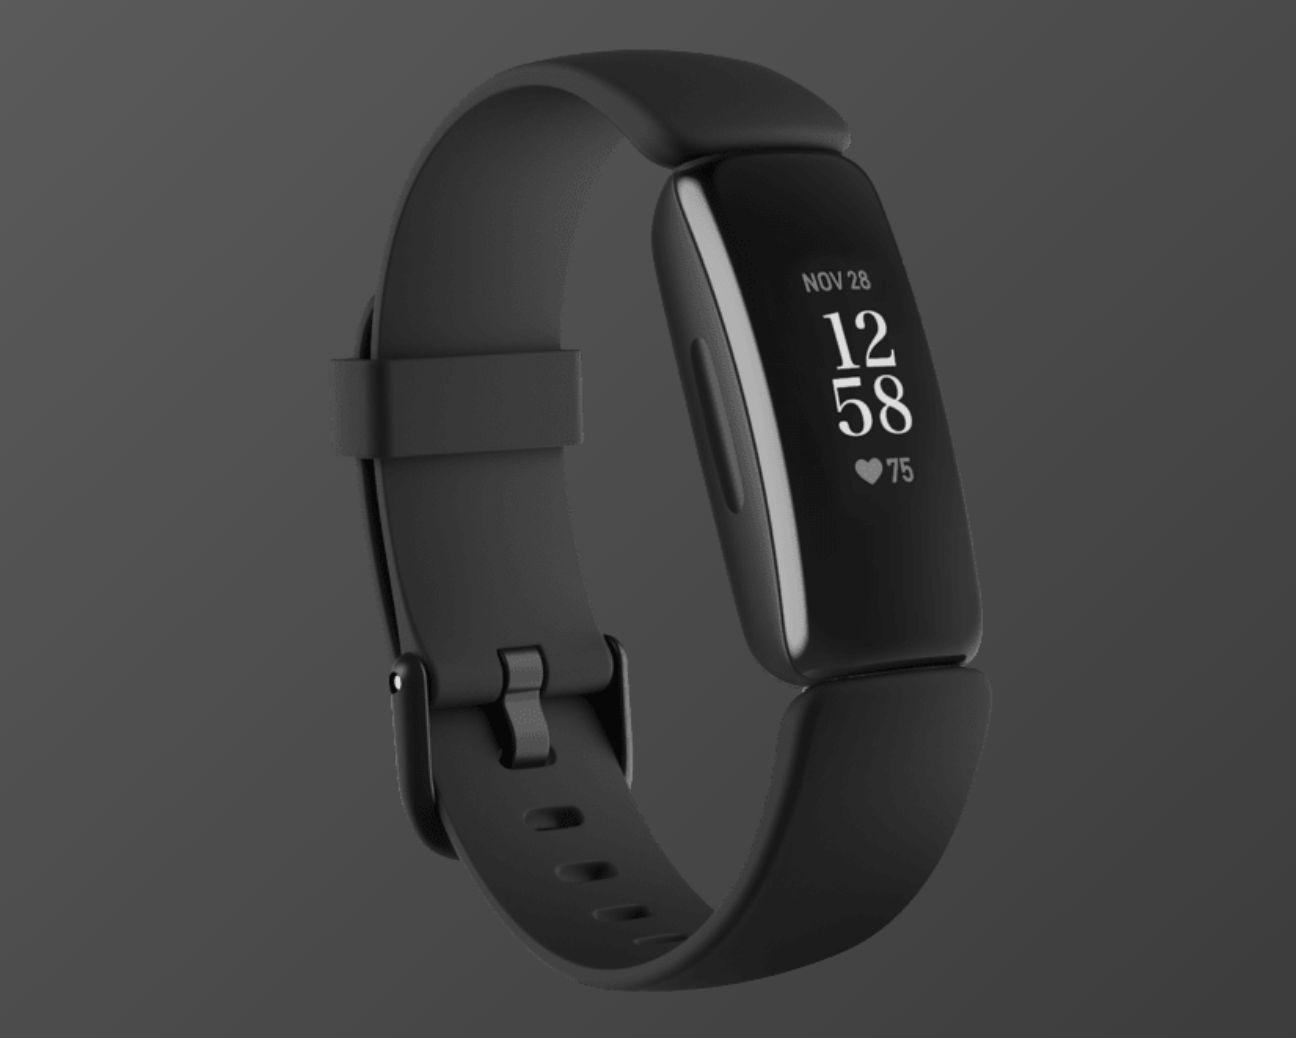 Fitbit Inspire2 利用レビュー】小型かつ軽量でオススメのスマート 